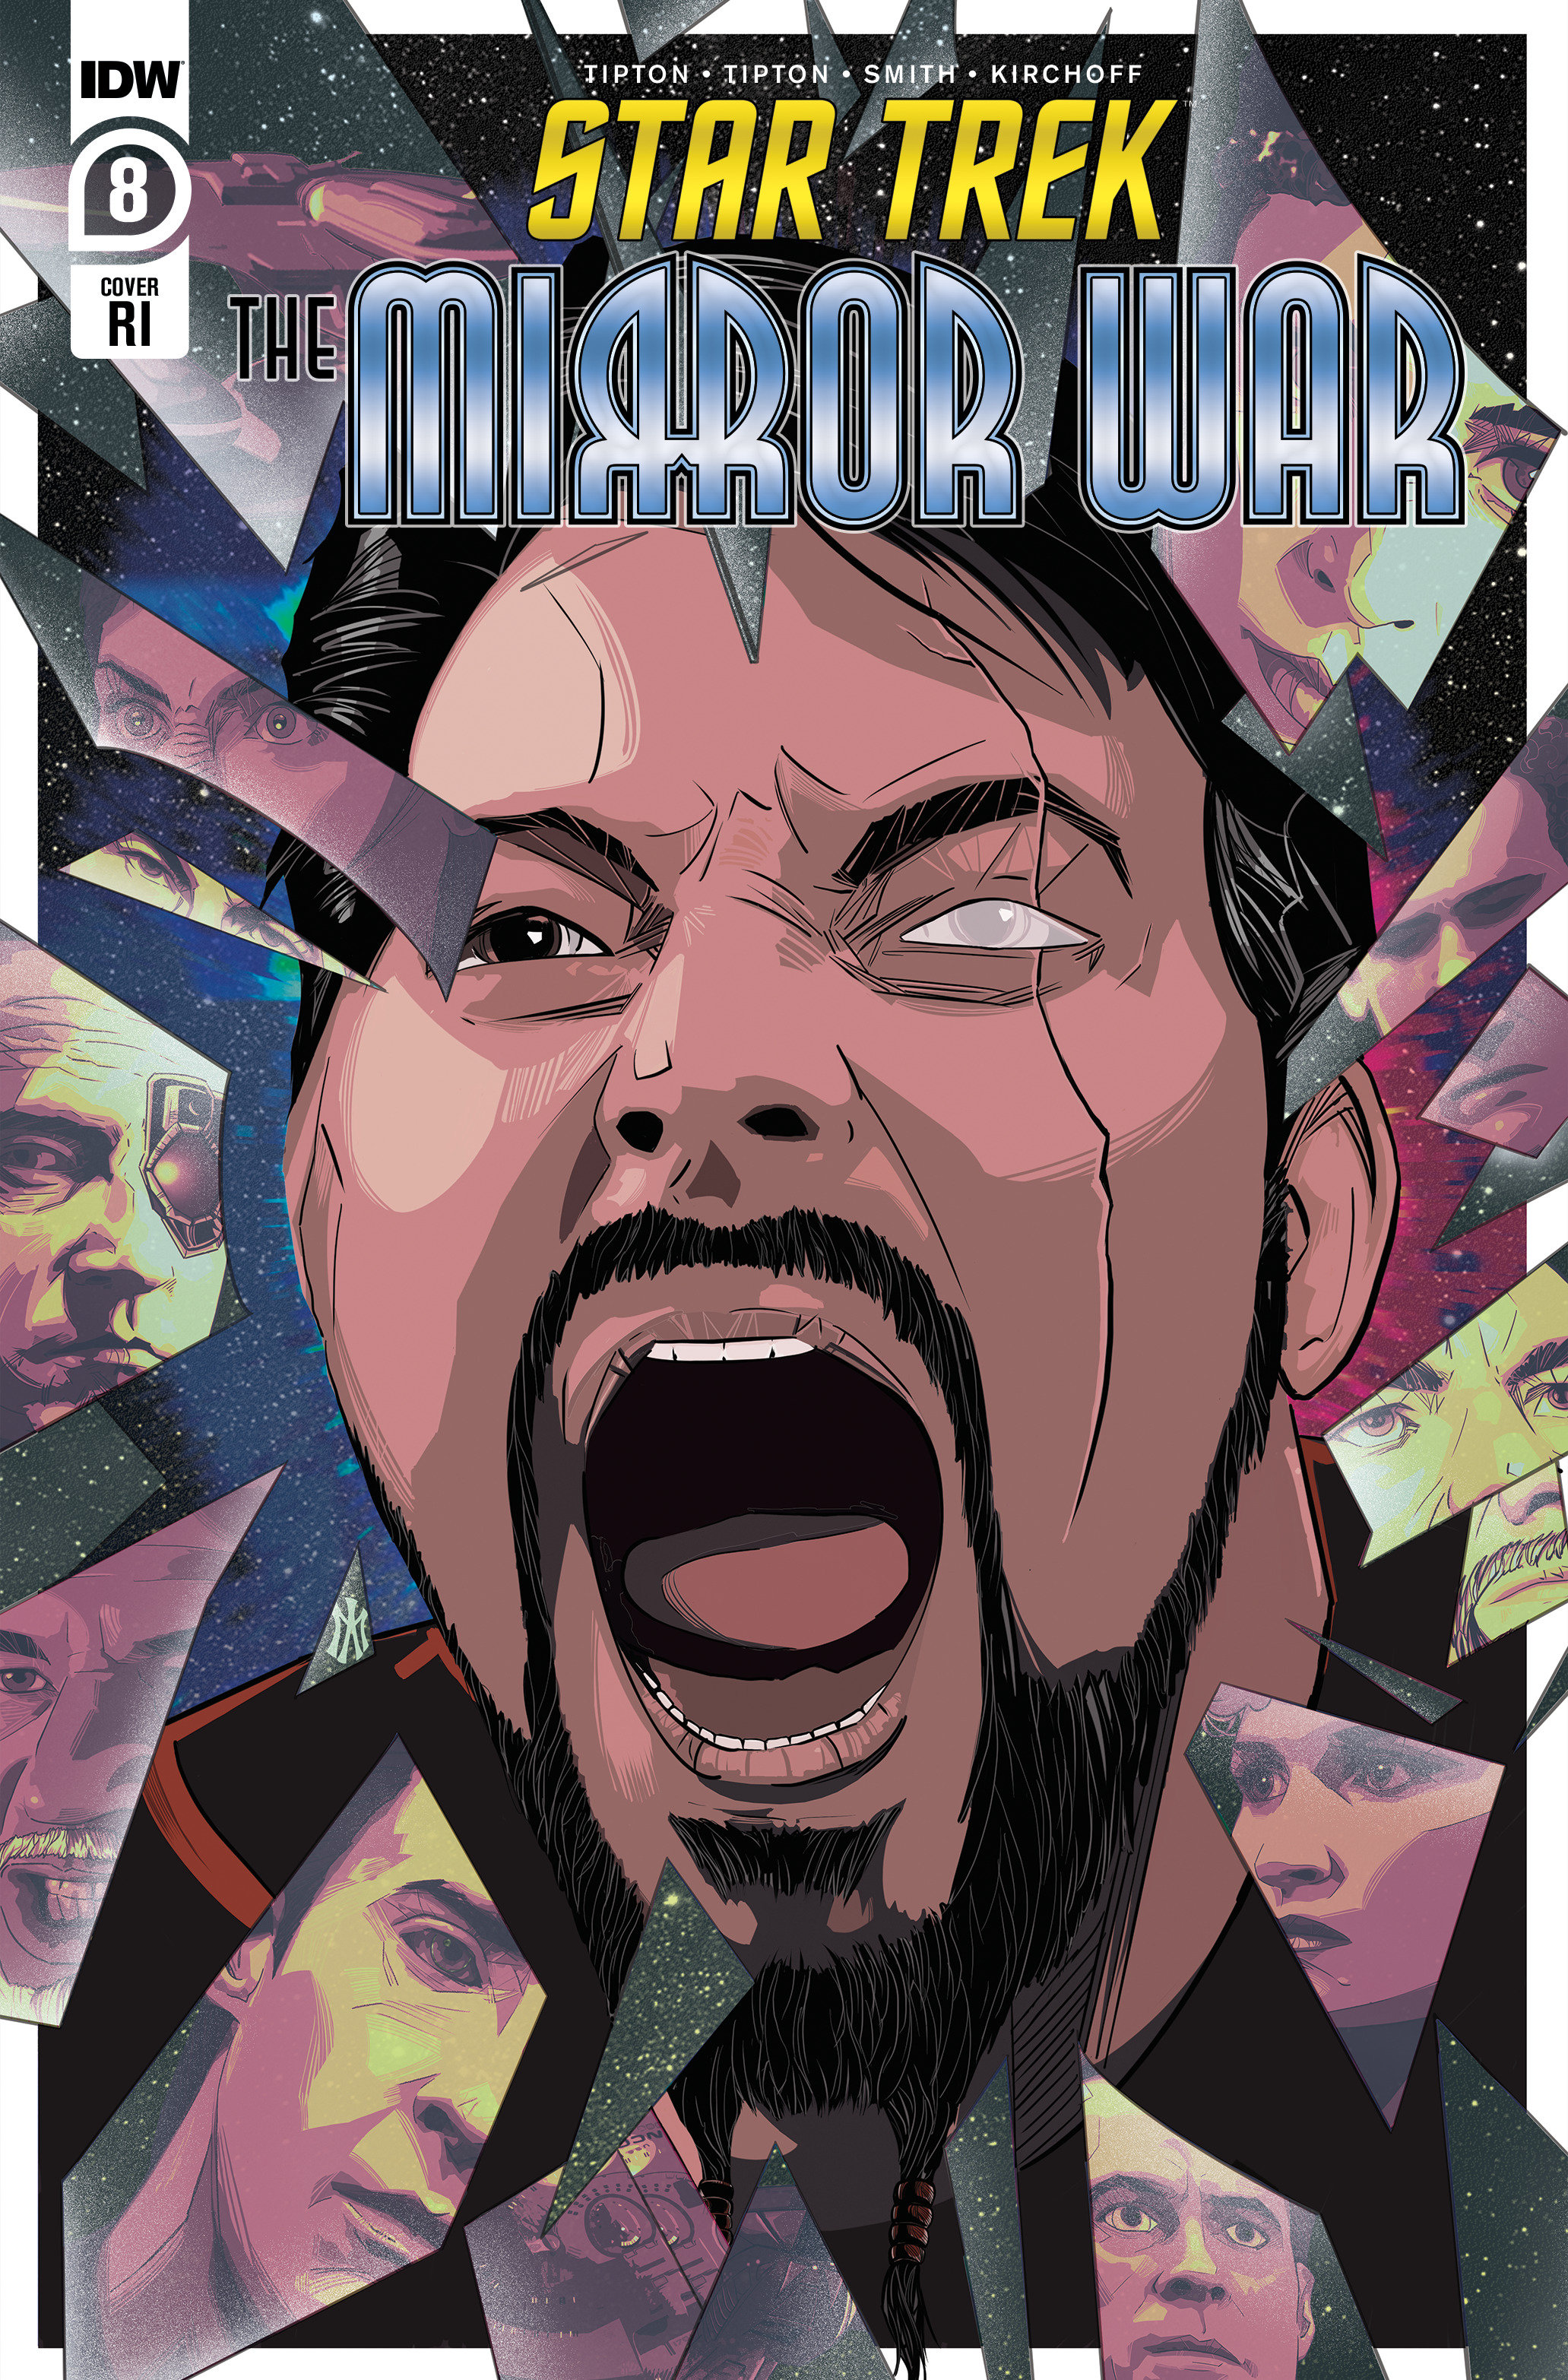 Star Trek Mirror War #8 Cover C 1 for 10 Incentive Alvarado (Of 8)